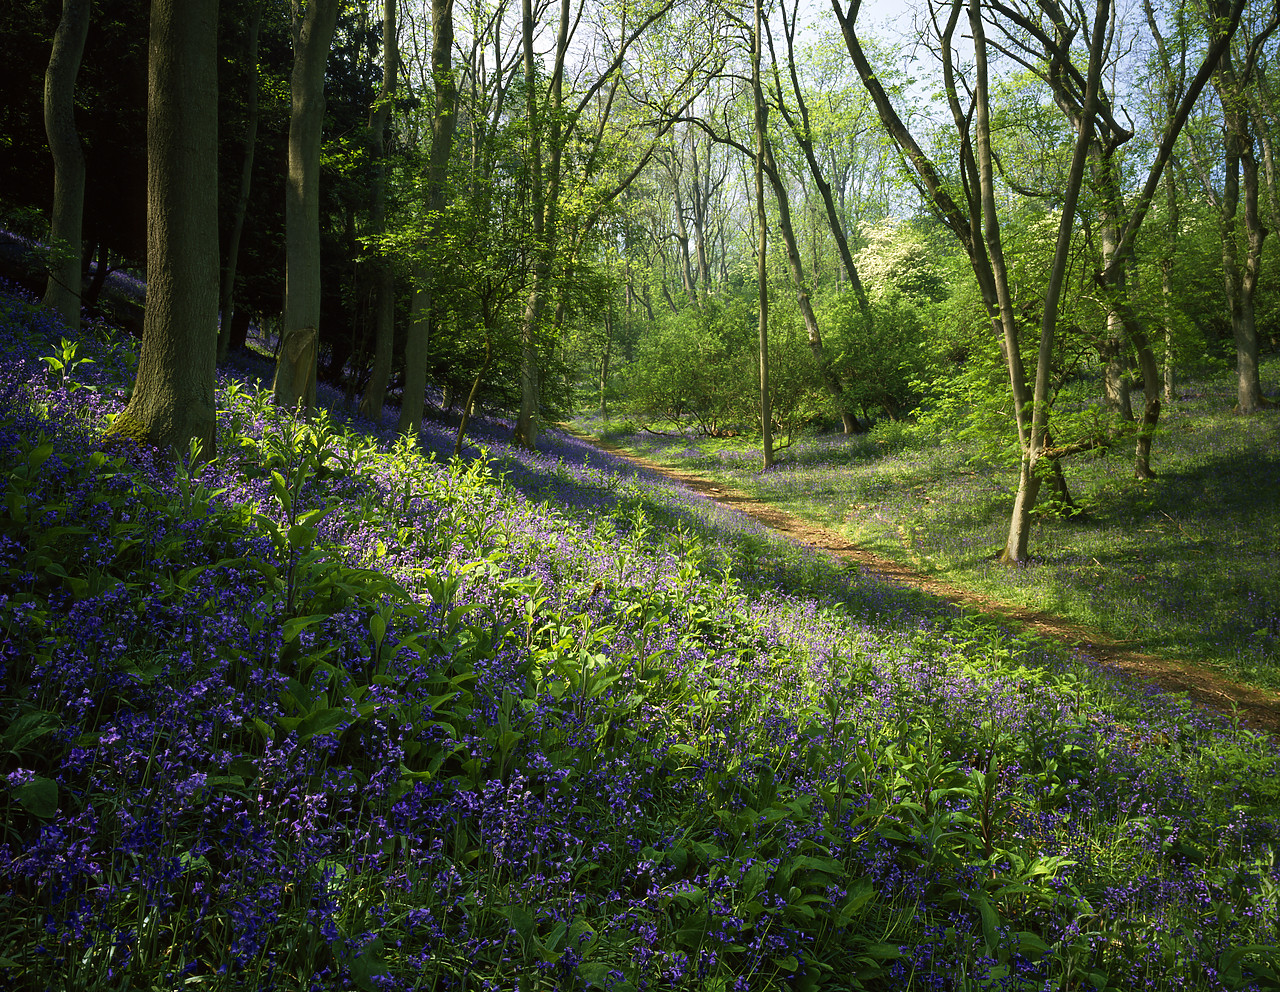 #924013-2 - Bluebell Wood, Malvern Hills, Worcestershire, England